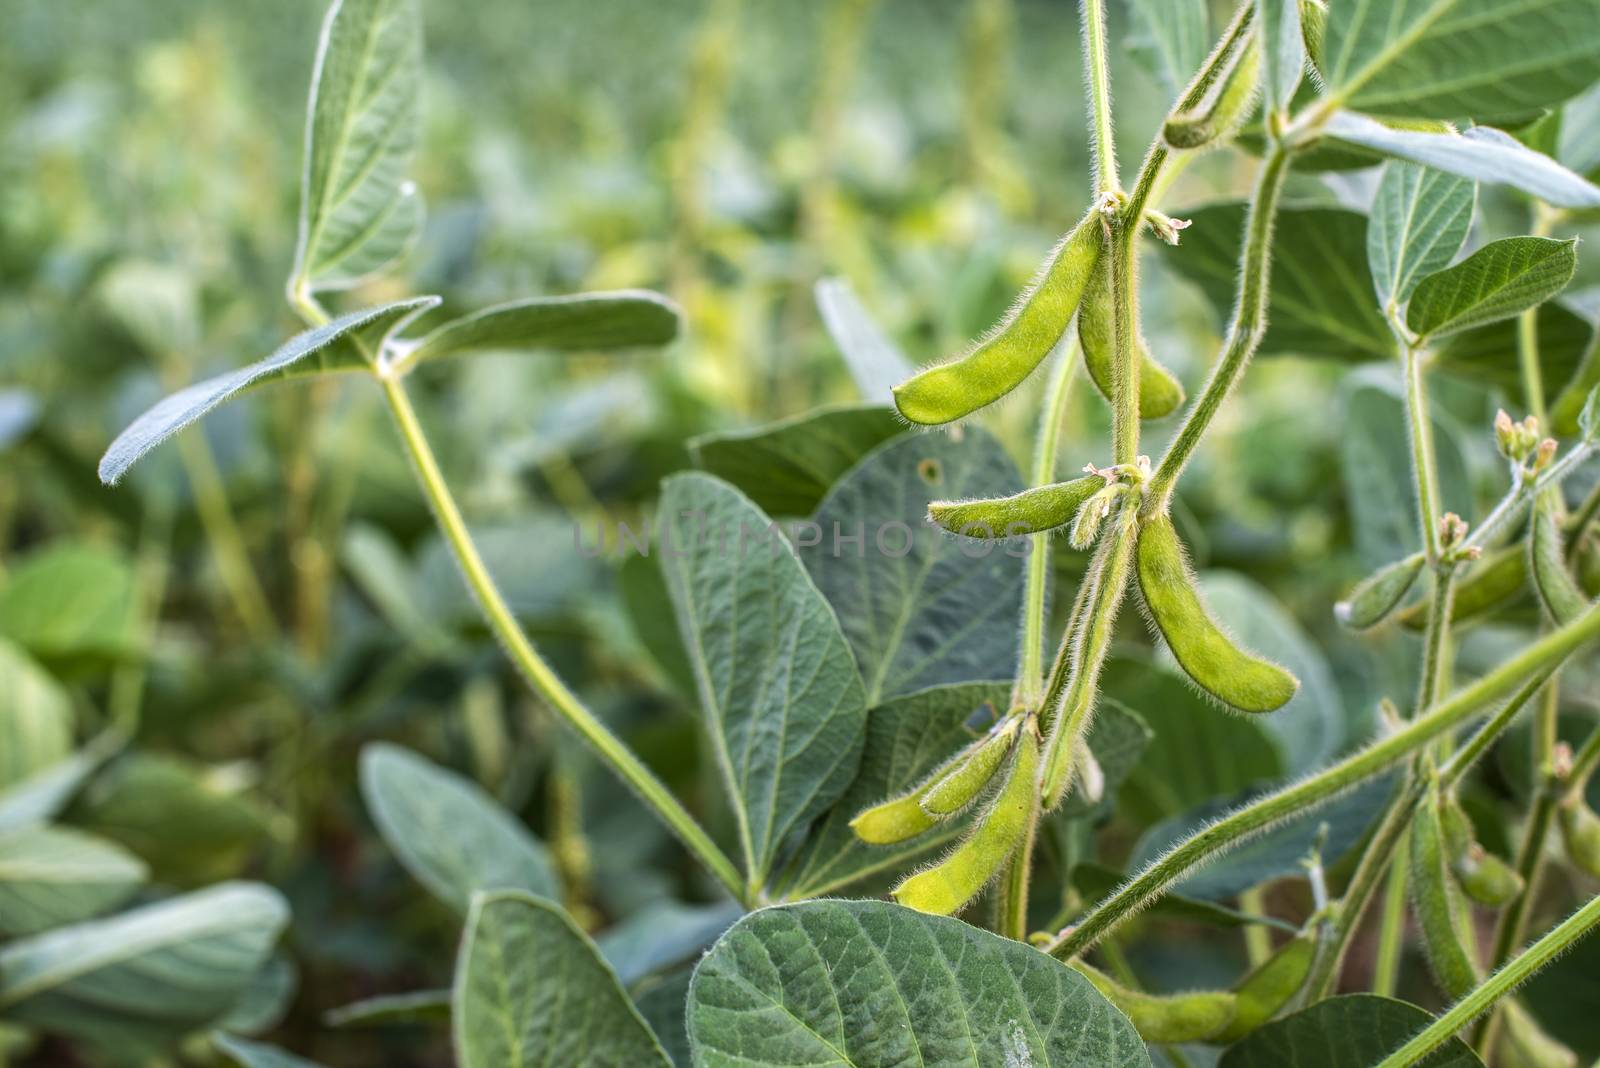 Edamame soybean plantation. Growing Edamame concept.